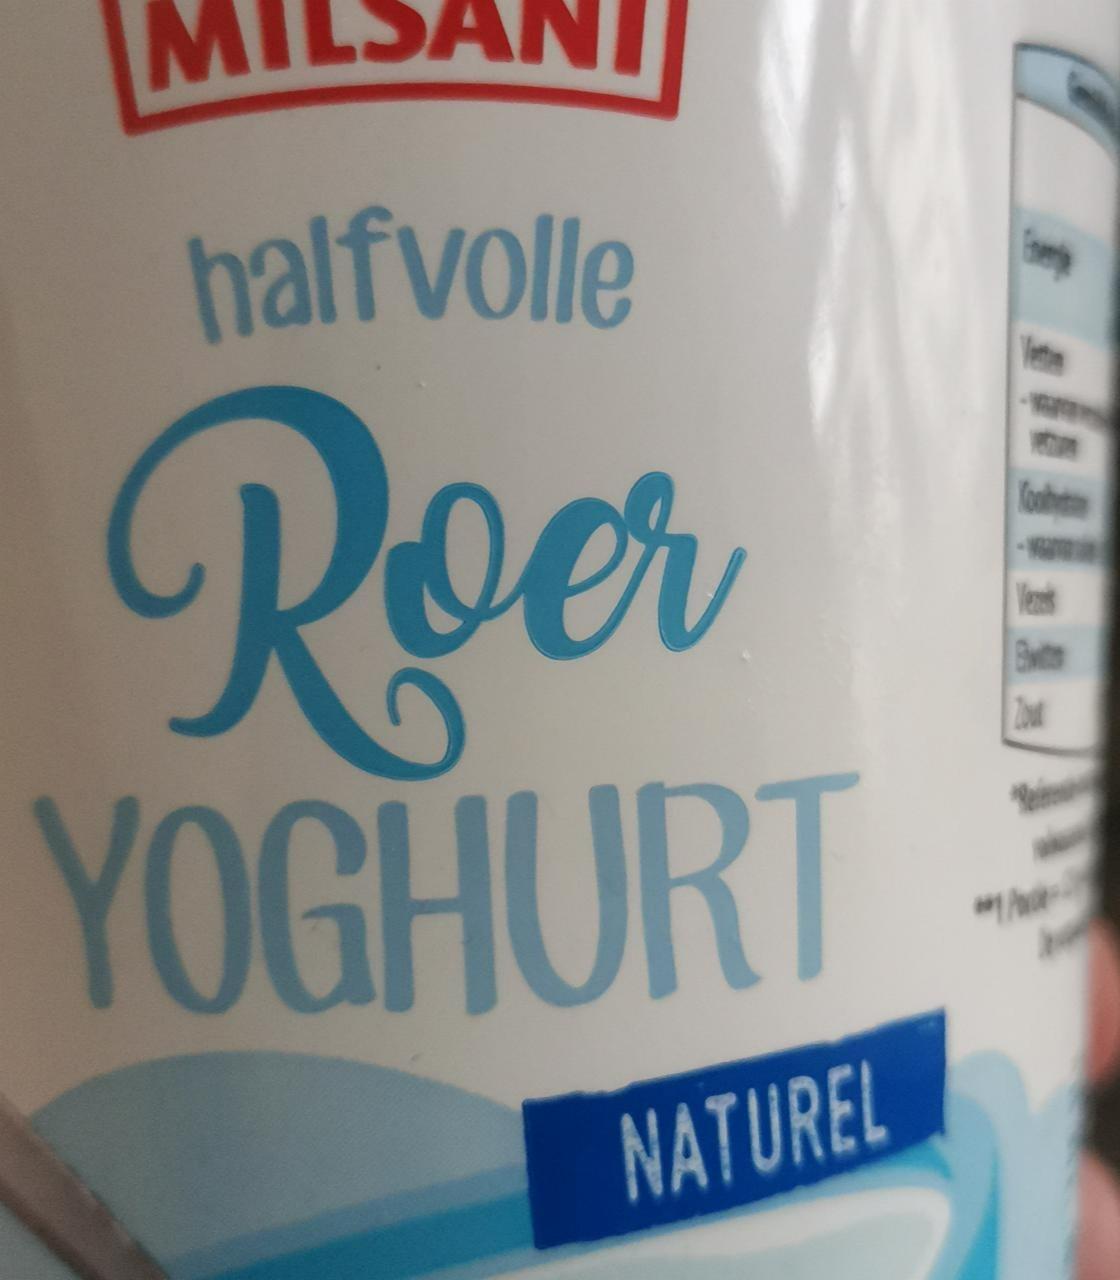 Fotografie - Halfvolle Roer Yoghurt Naturel Milsani